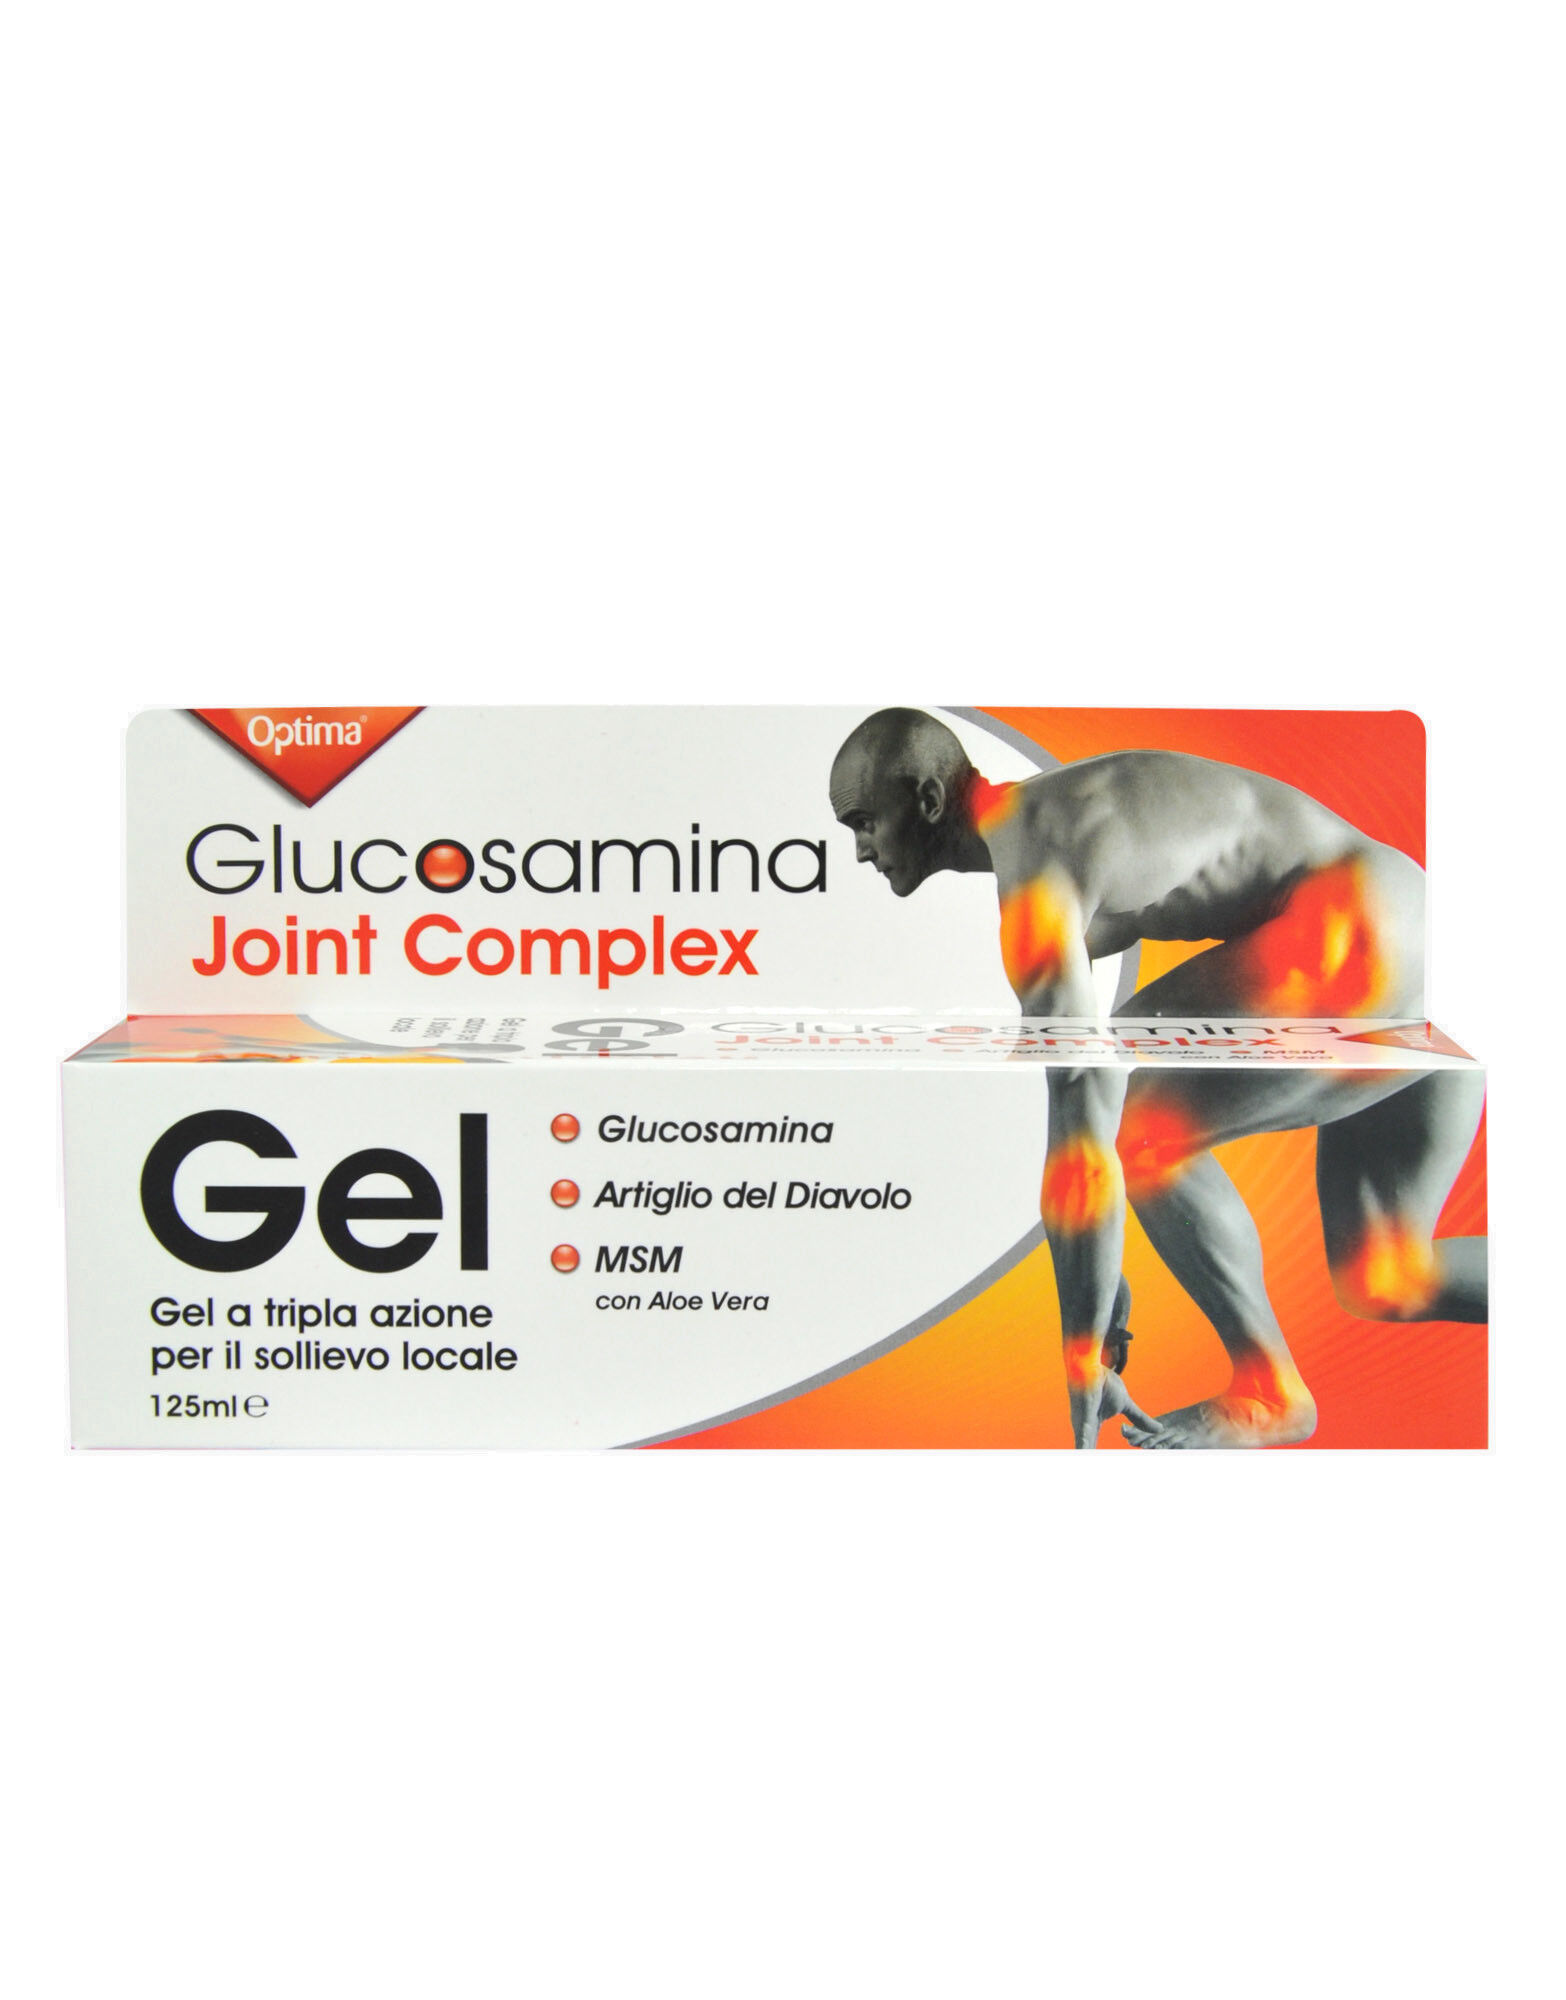 OPTIMA Glucosamina Joint Complex - Gel 125ml